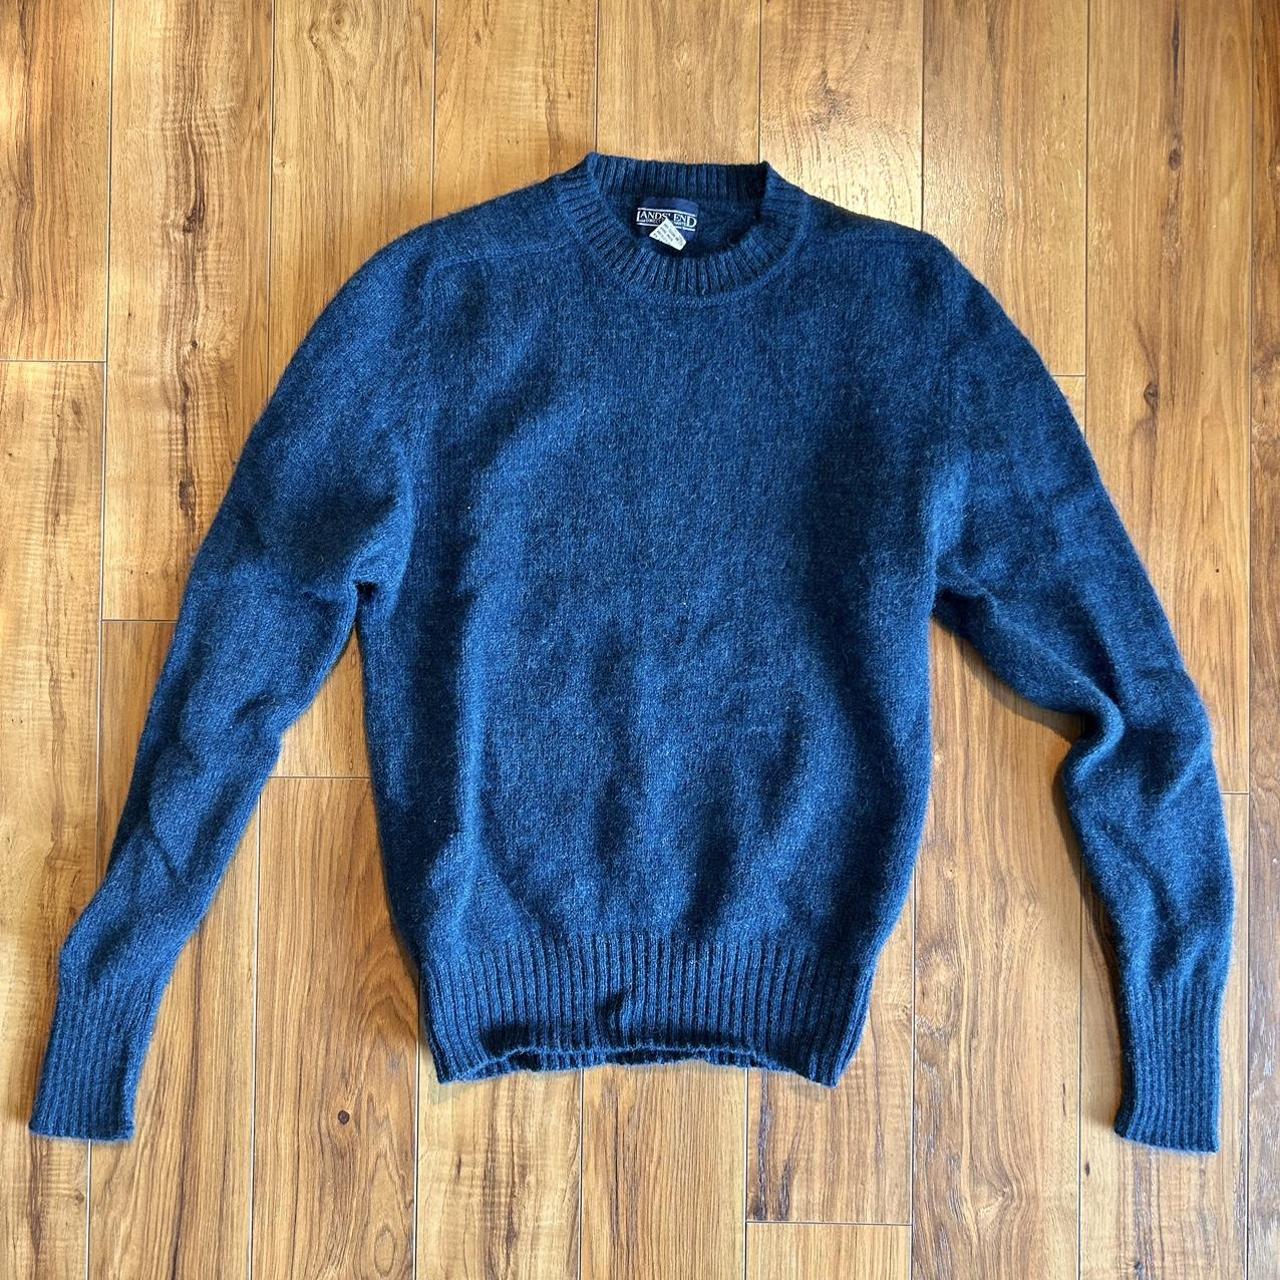 Vintage Lands’ End wool sweater. Very cool aqua blue...